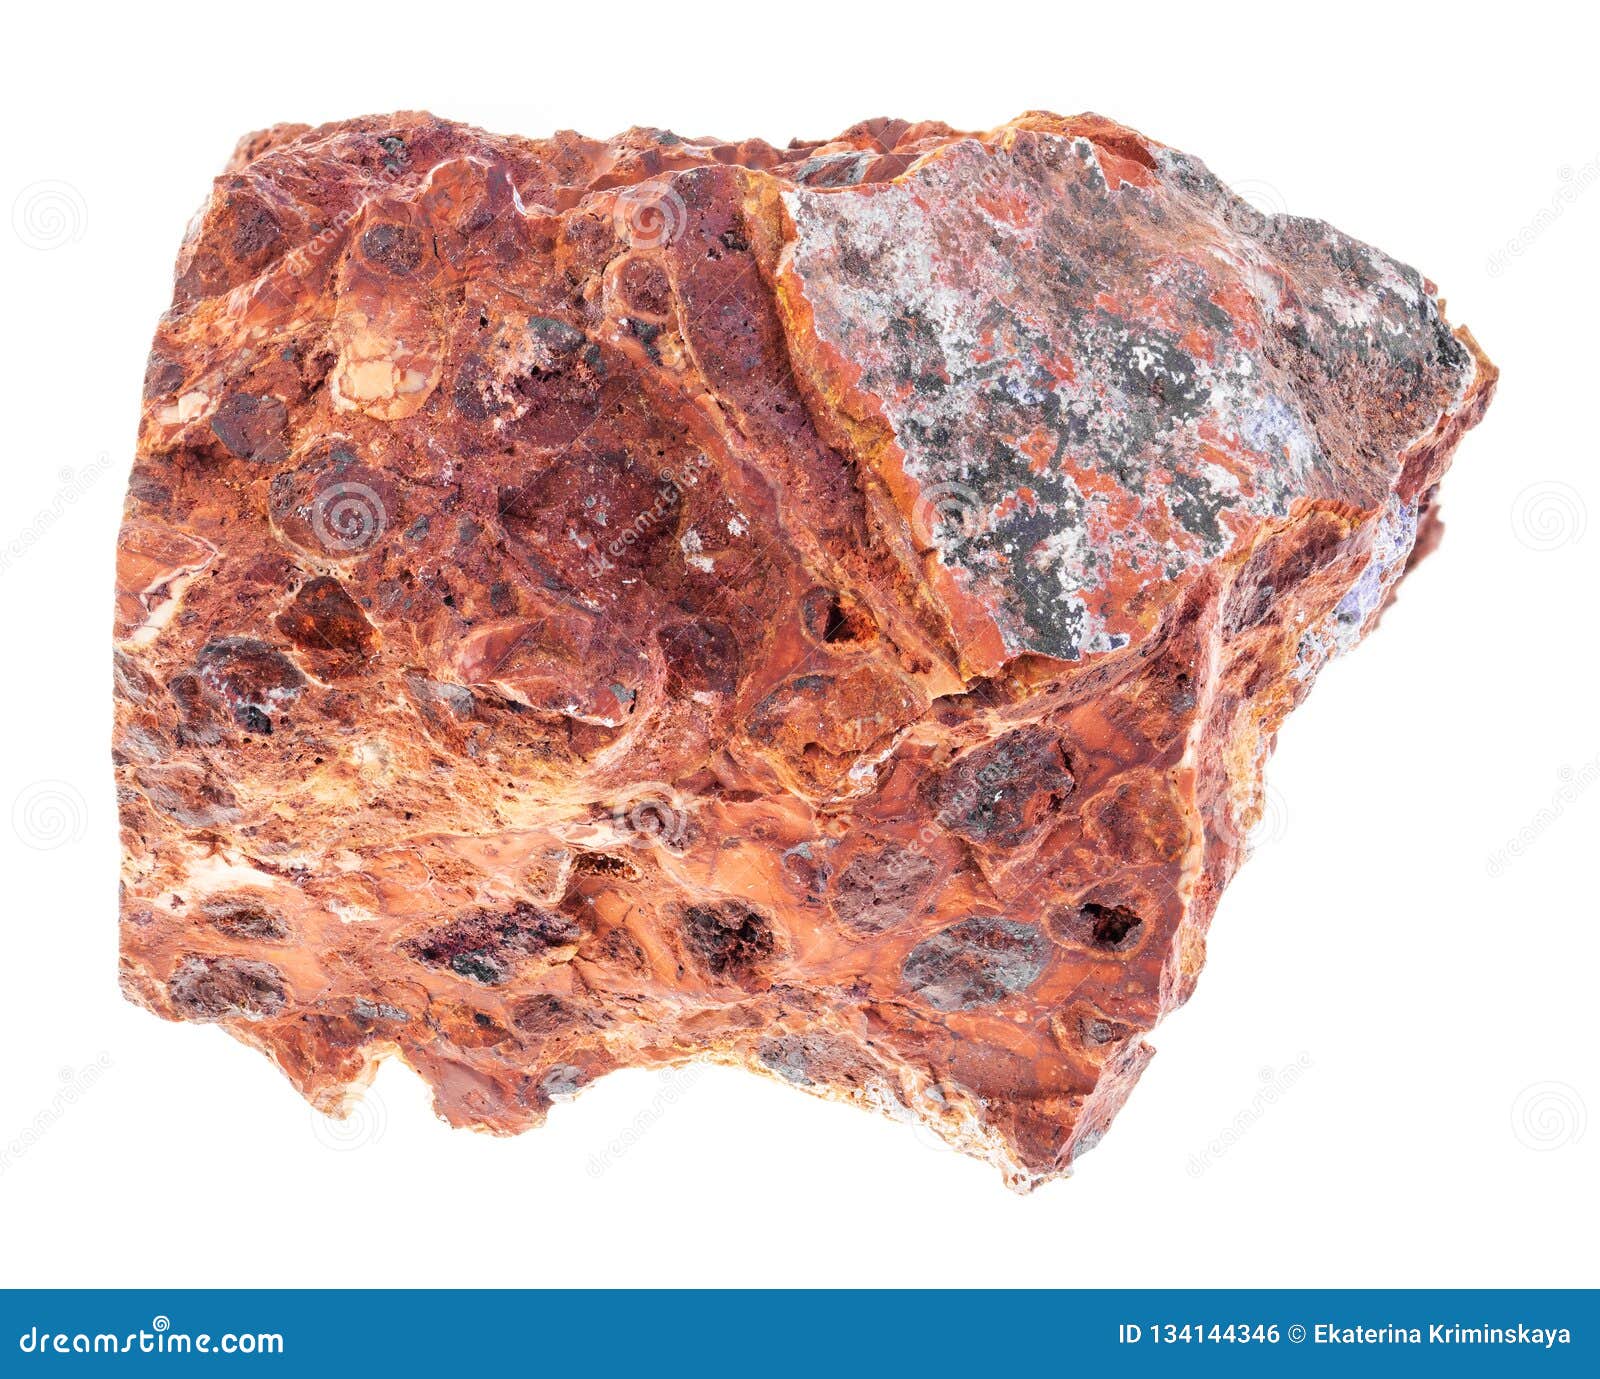 raw bauxite (aluminium ore) stone on white